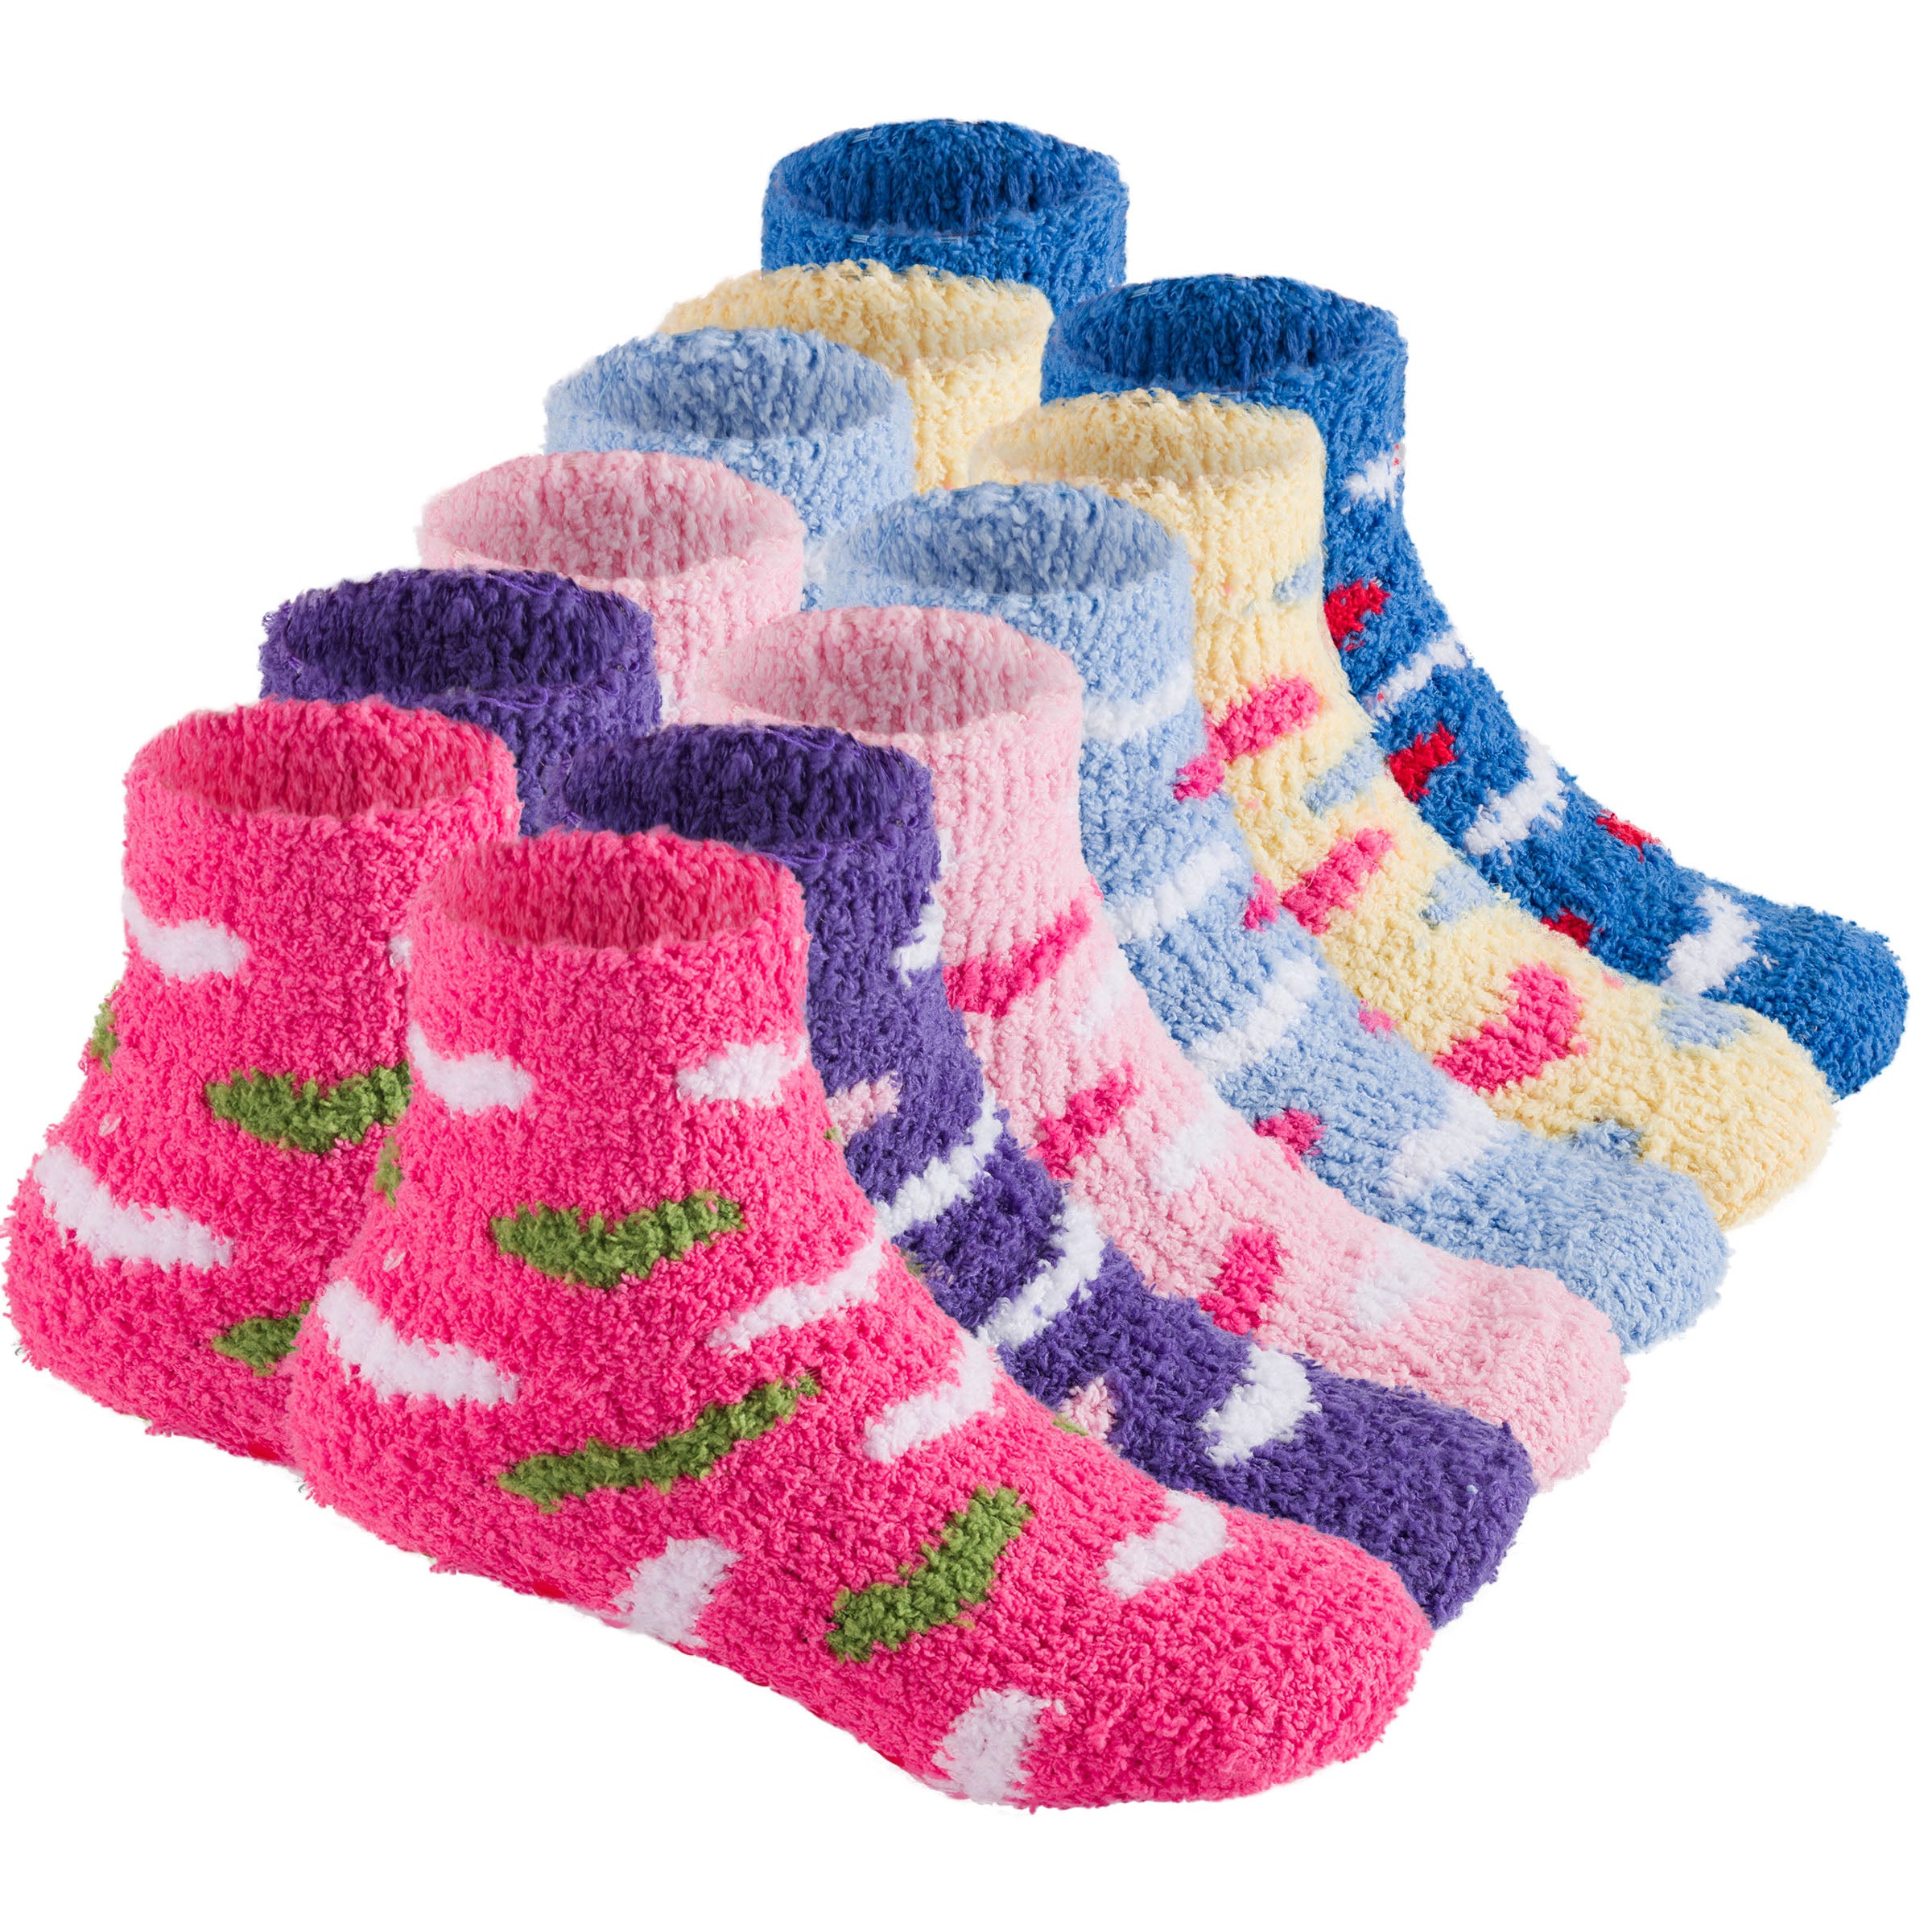 Fuzzy Socks for Kids - 6 Pairs – Debra Weitzner